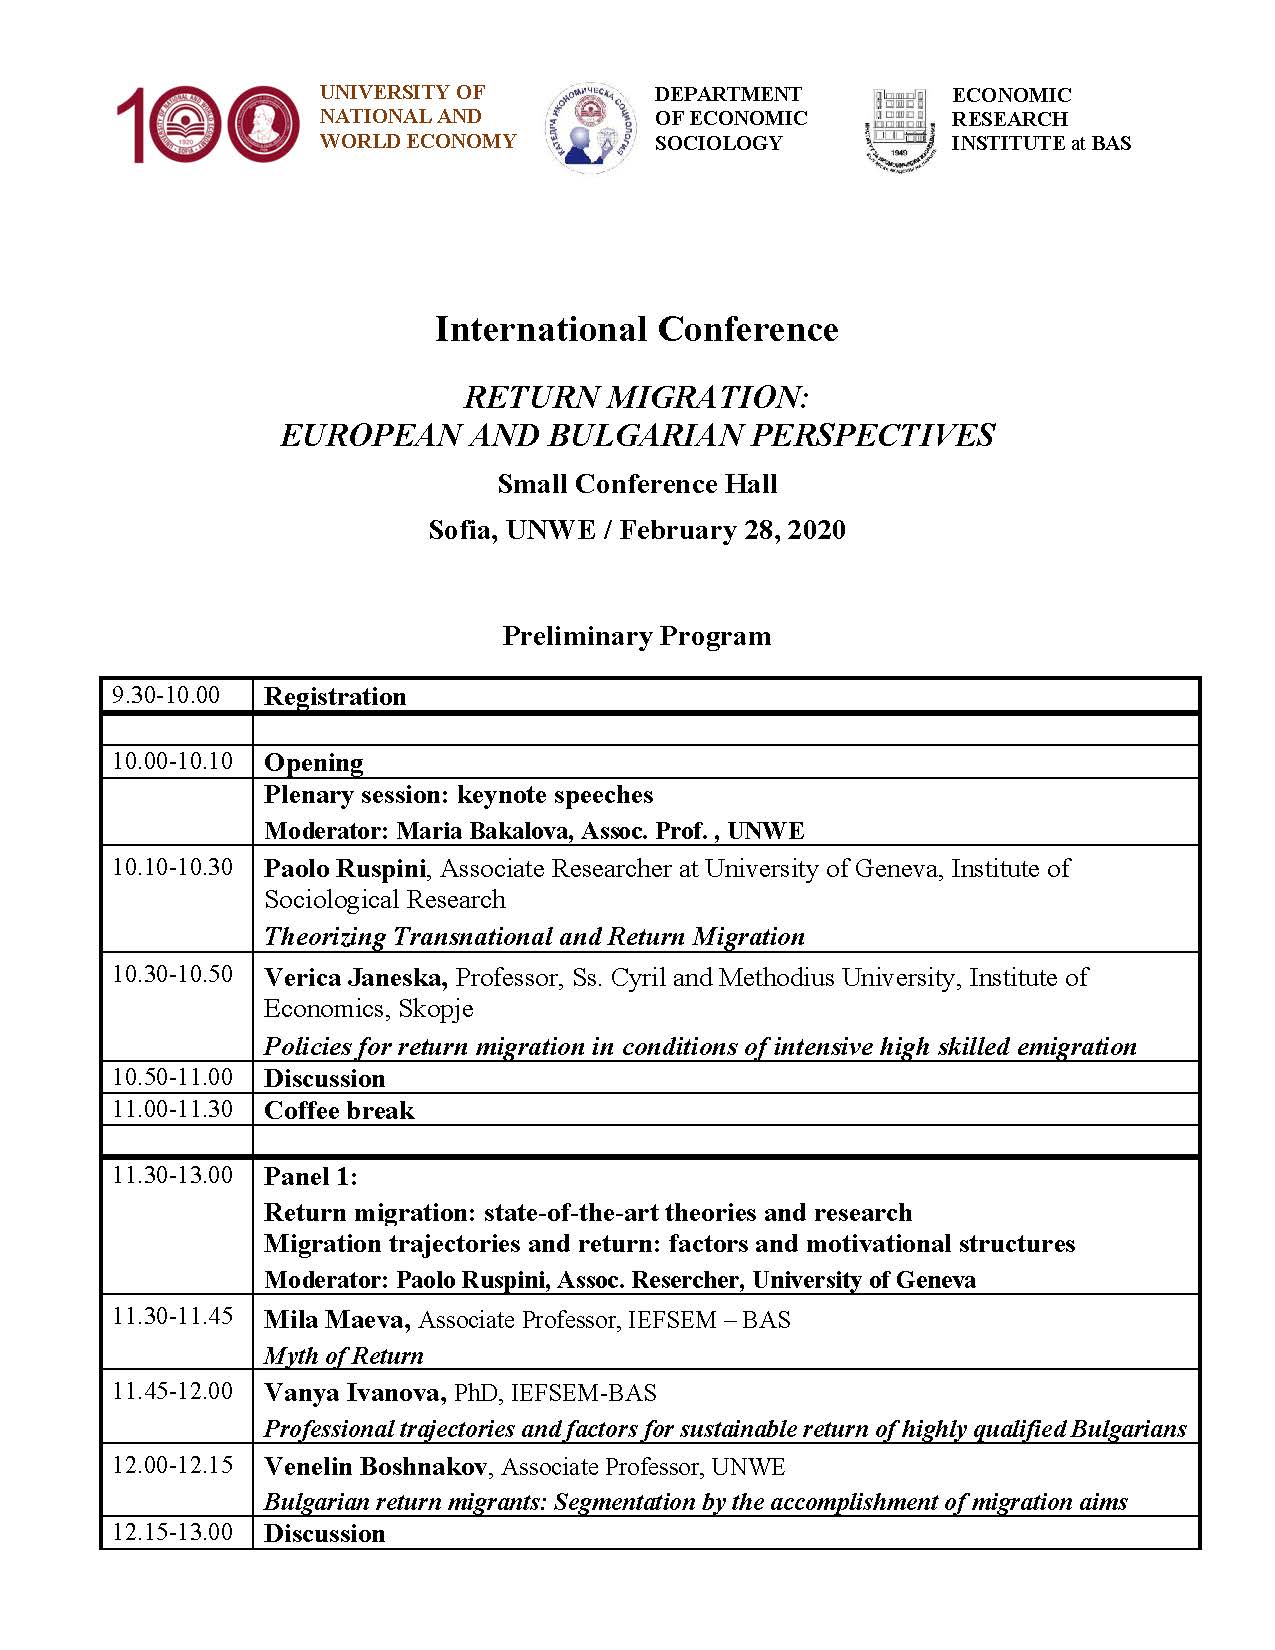 soc_602ad_Preliminary Program Conference 200220_Page_1.jpg